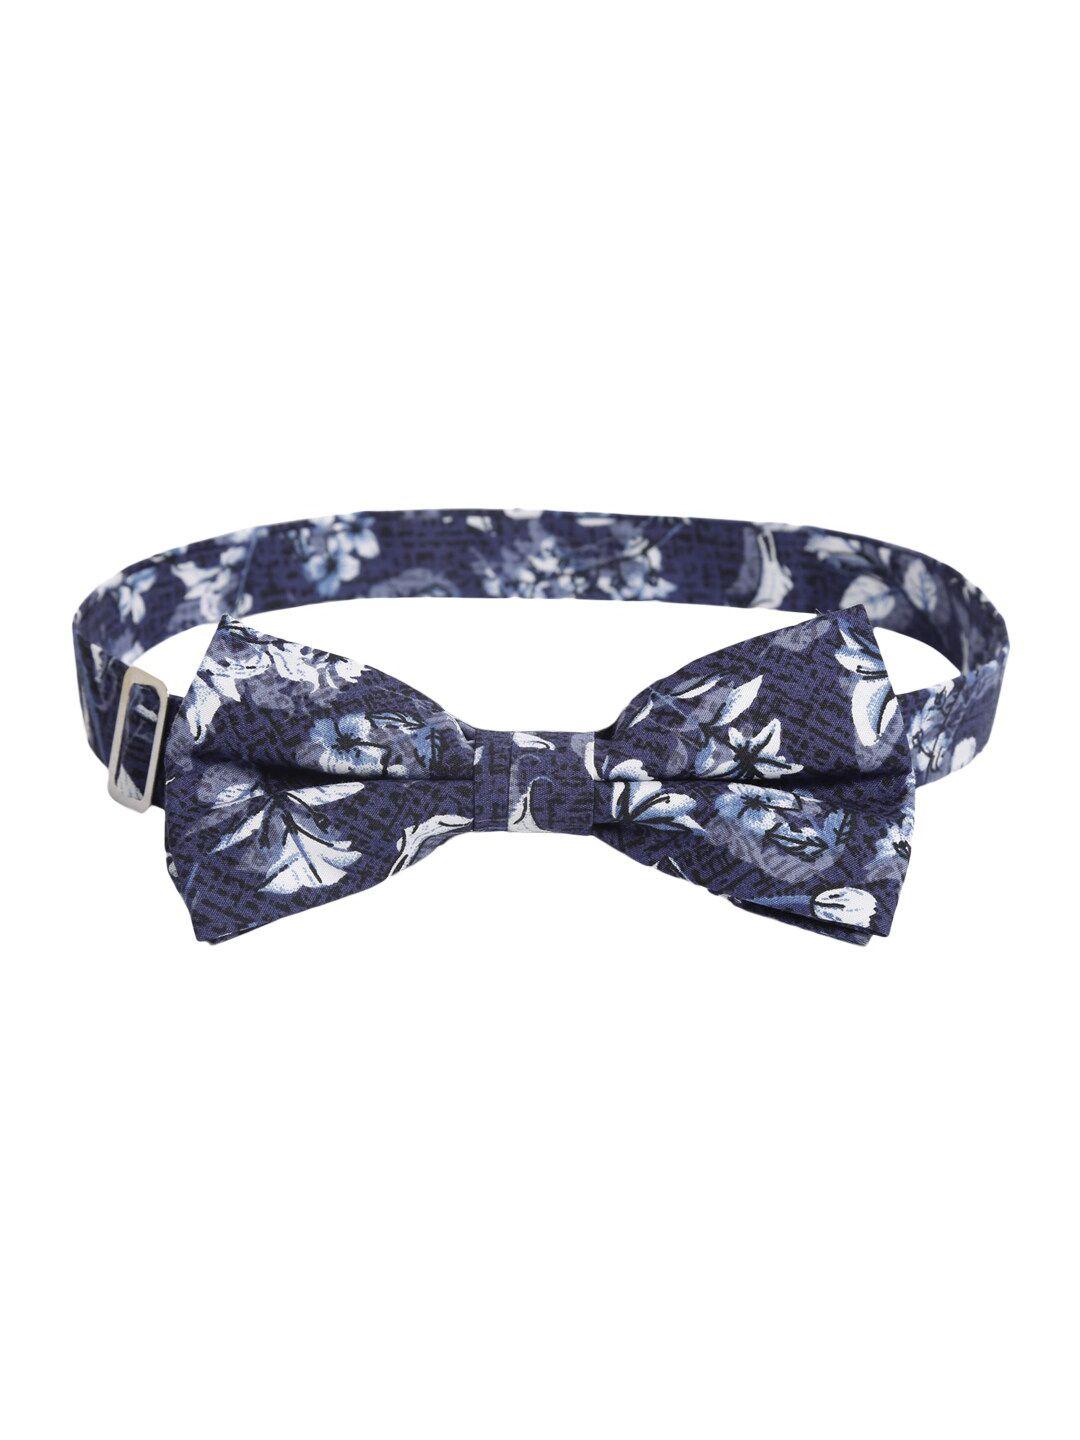 bruun & stengade navy blue & white printed bow tie